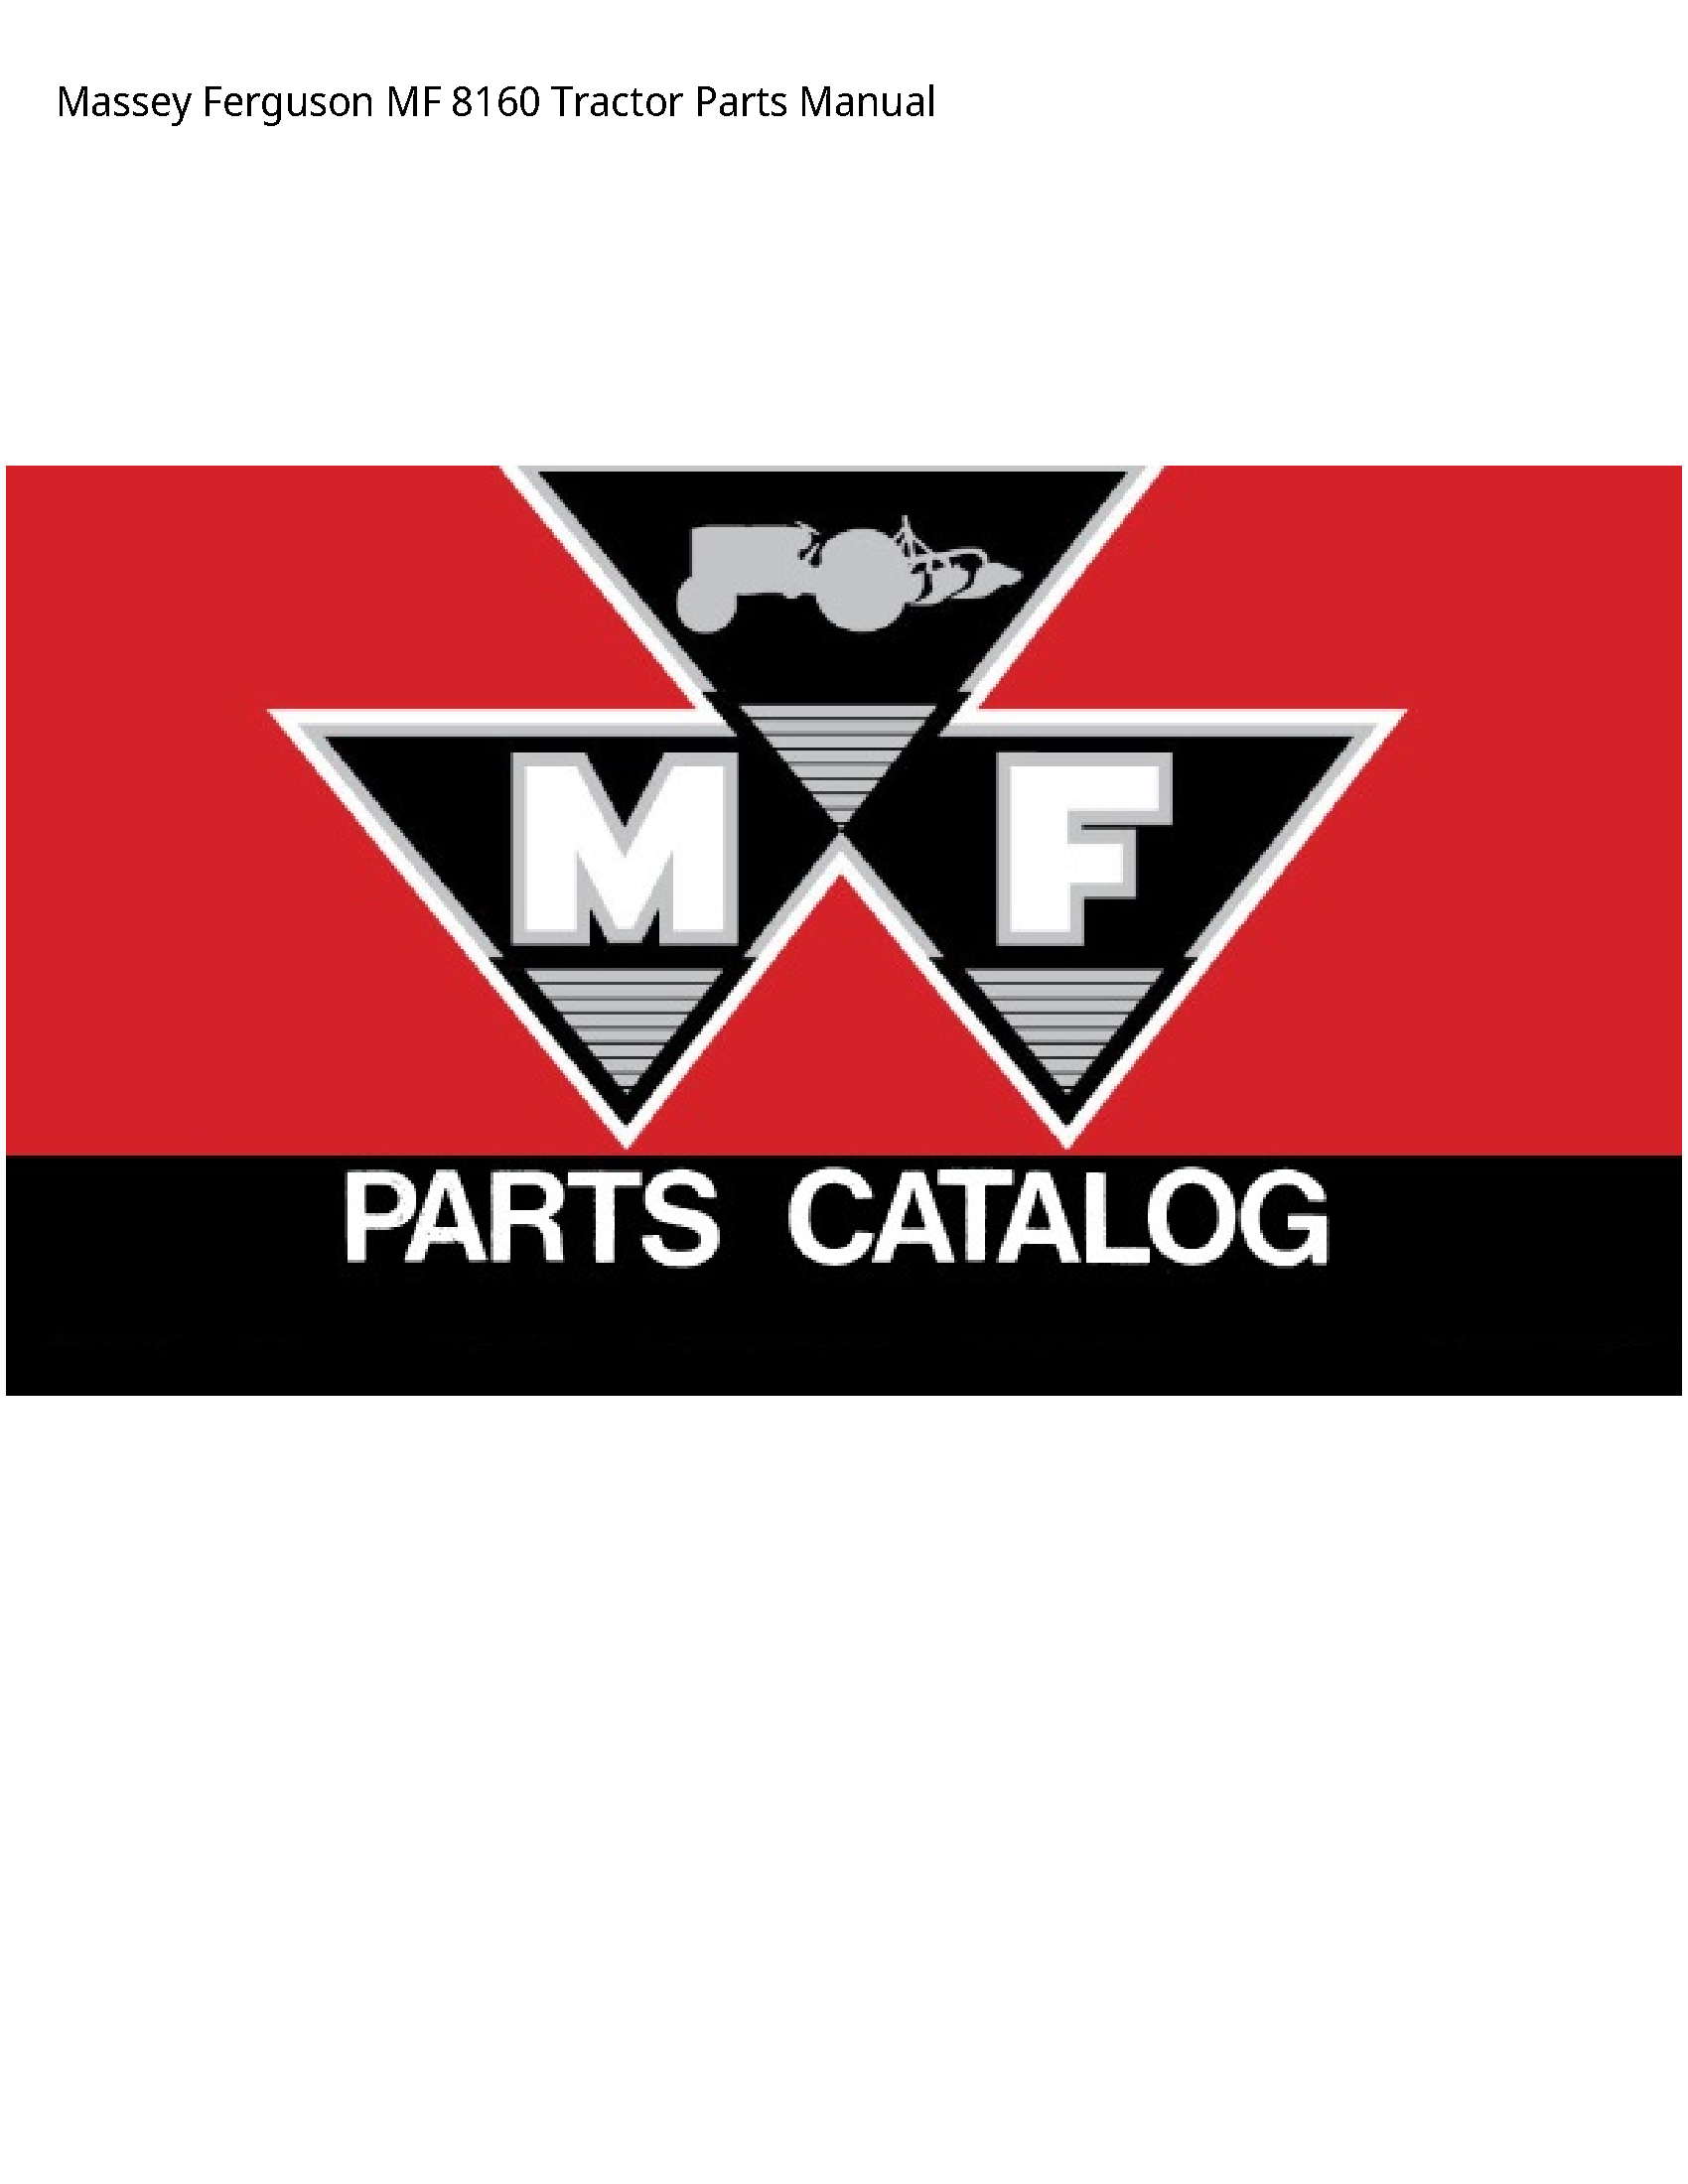 Massey Ferguson 8160 MF Tractor Parts manual